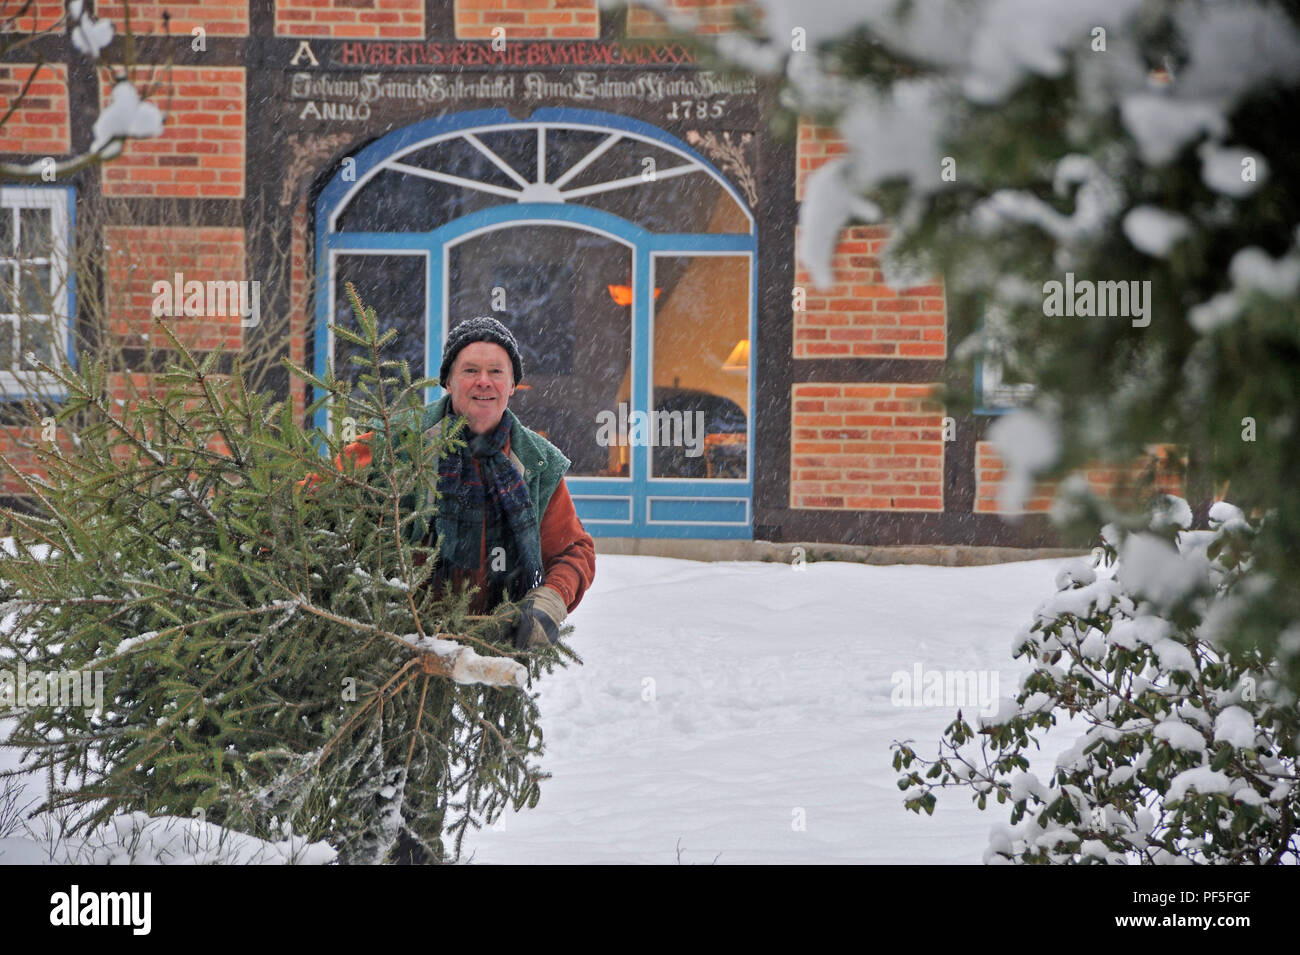 Mann trägt Weihnachtsbaum im Schnee | man carries Christmas tree home, walking through deep snow Stock Photo